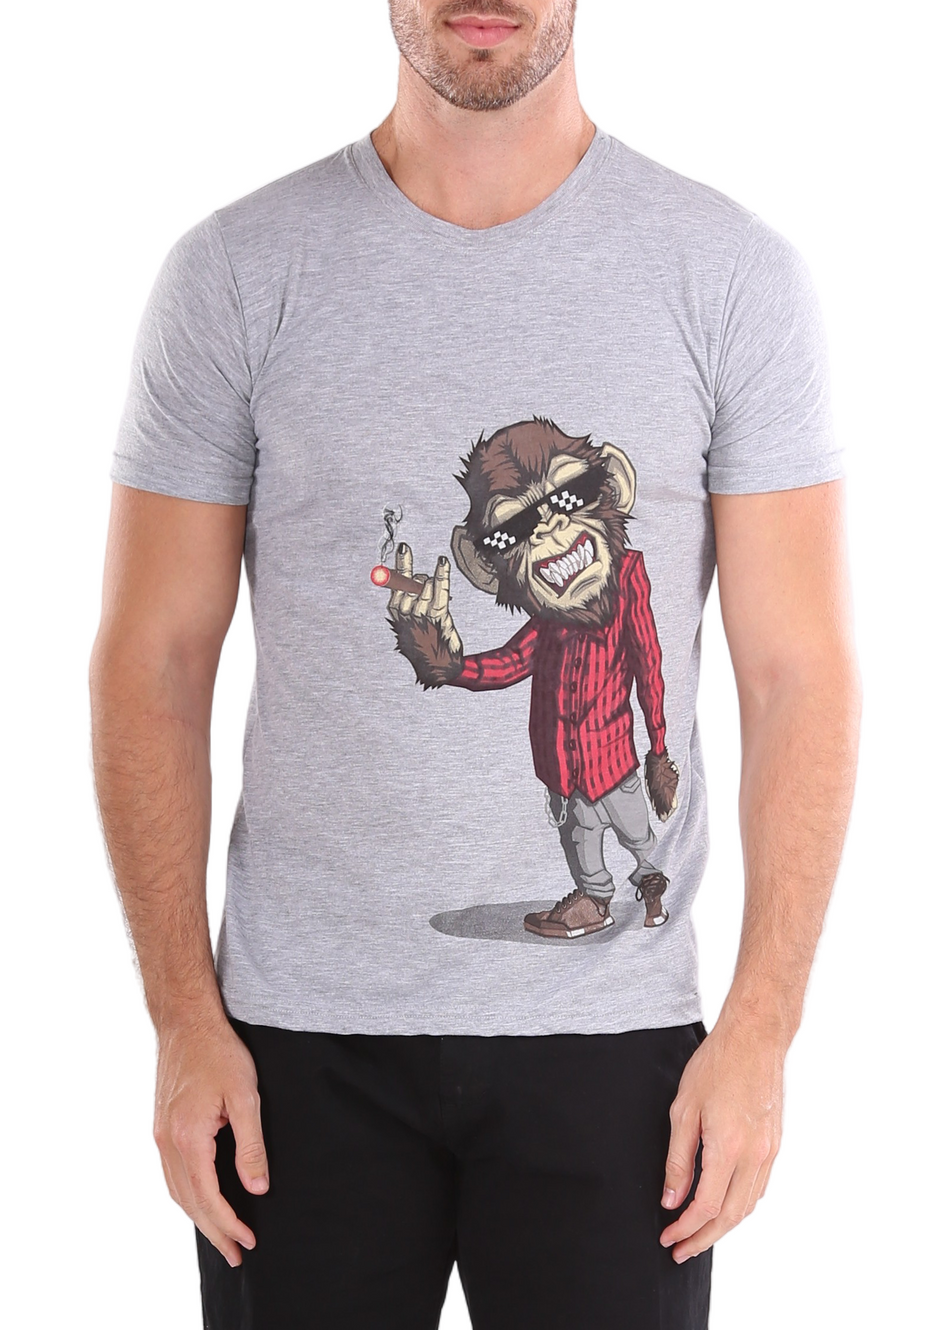 161868 - Monkey Business Men's Heather Gray Short Sleeve T-Shirt